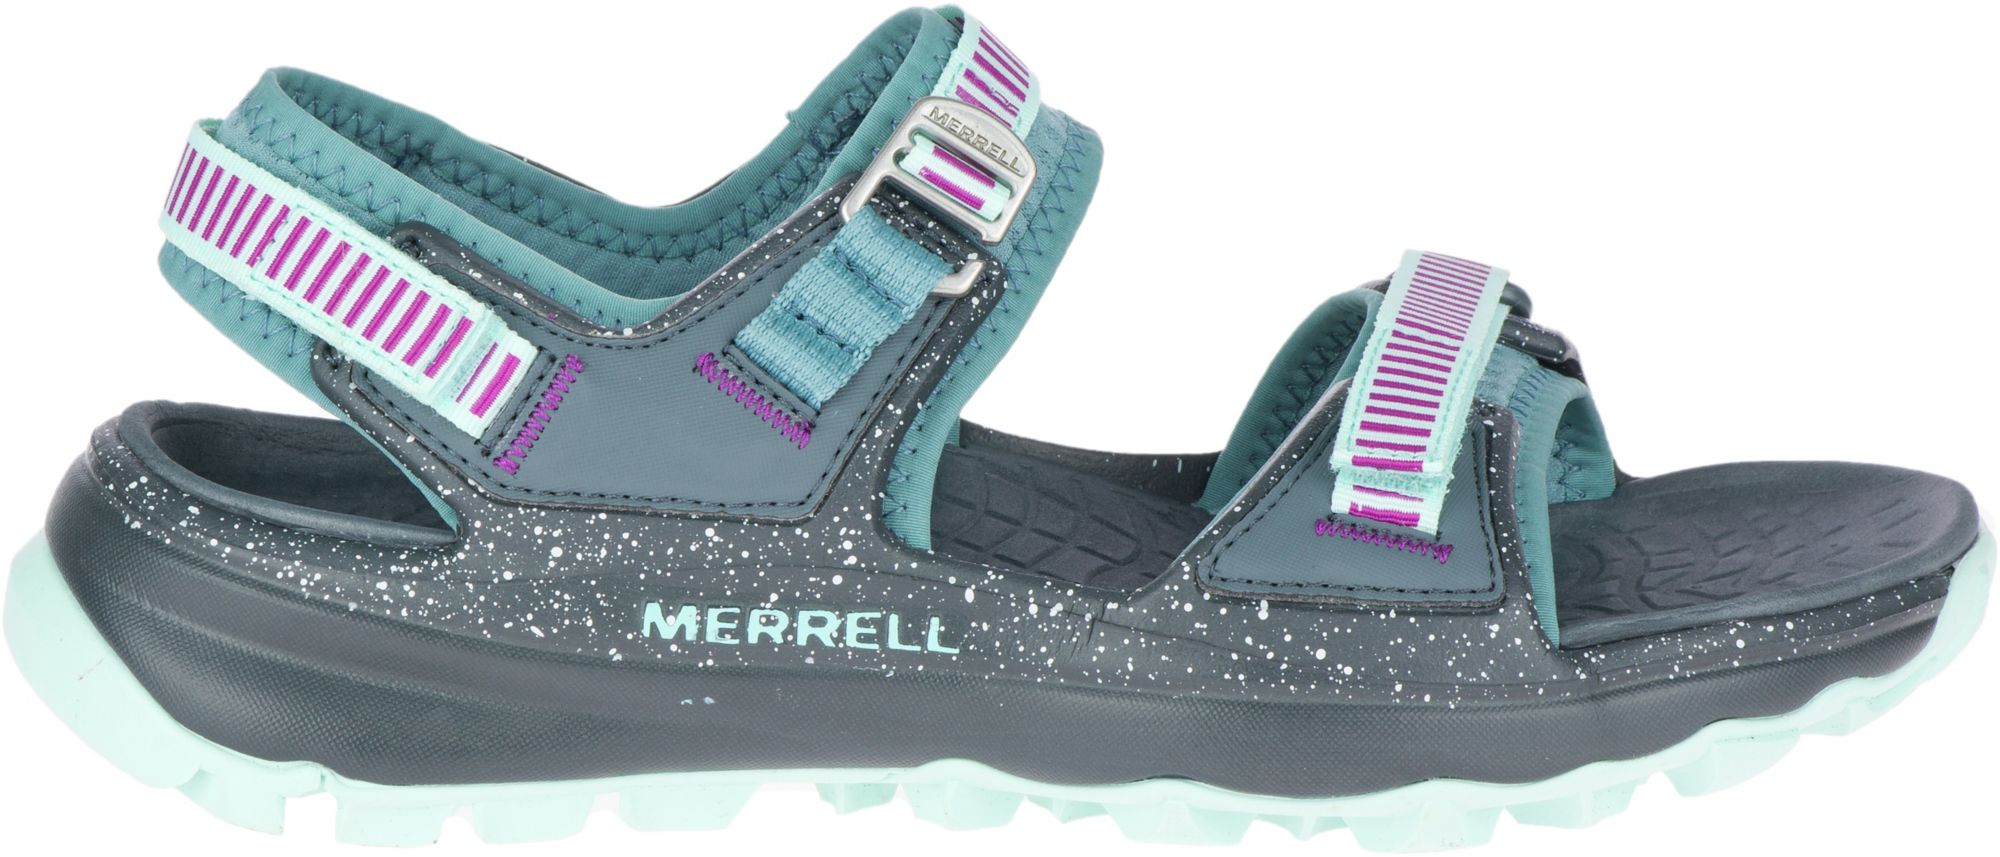 merrell hiking sandals womens